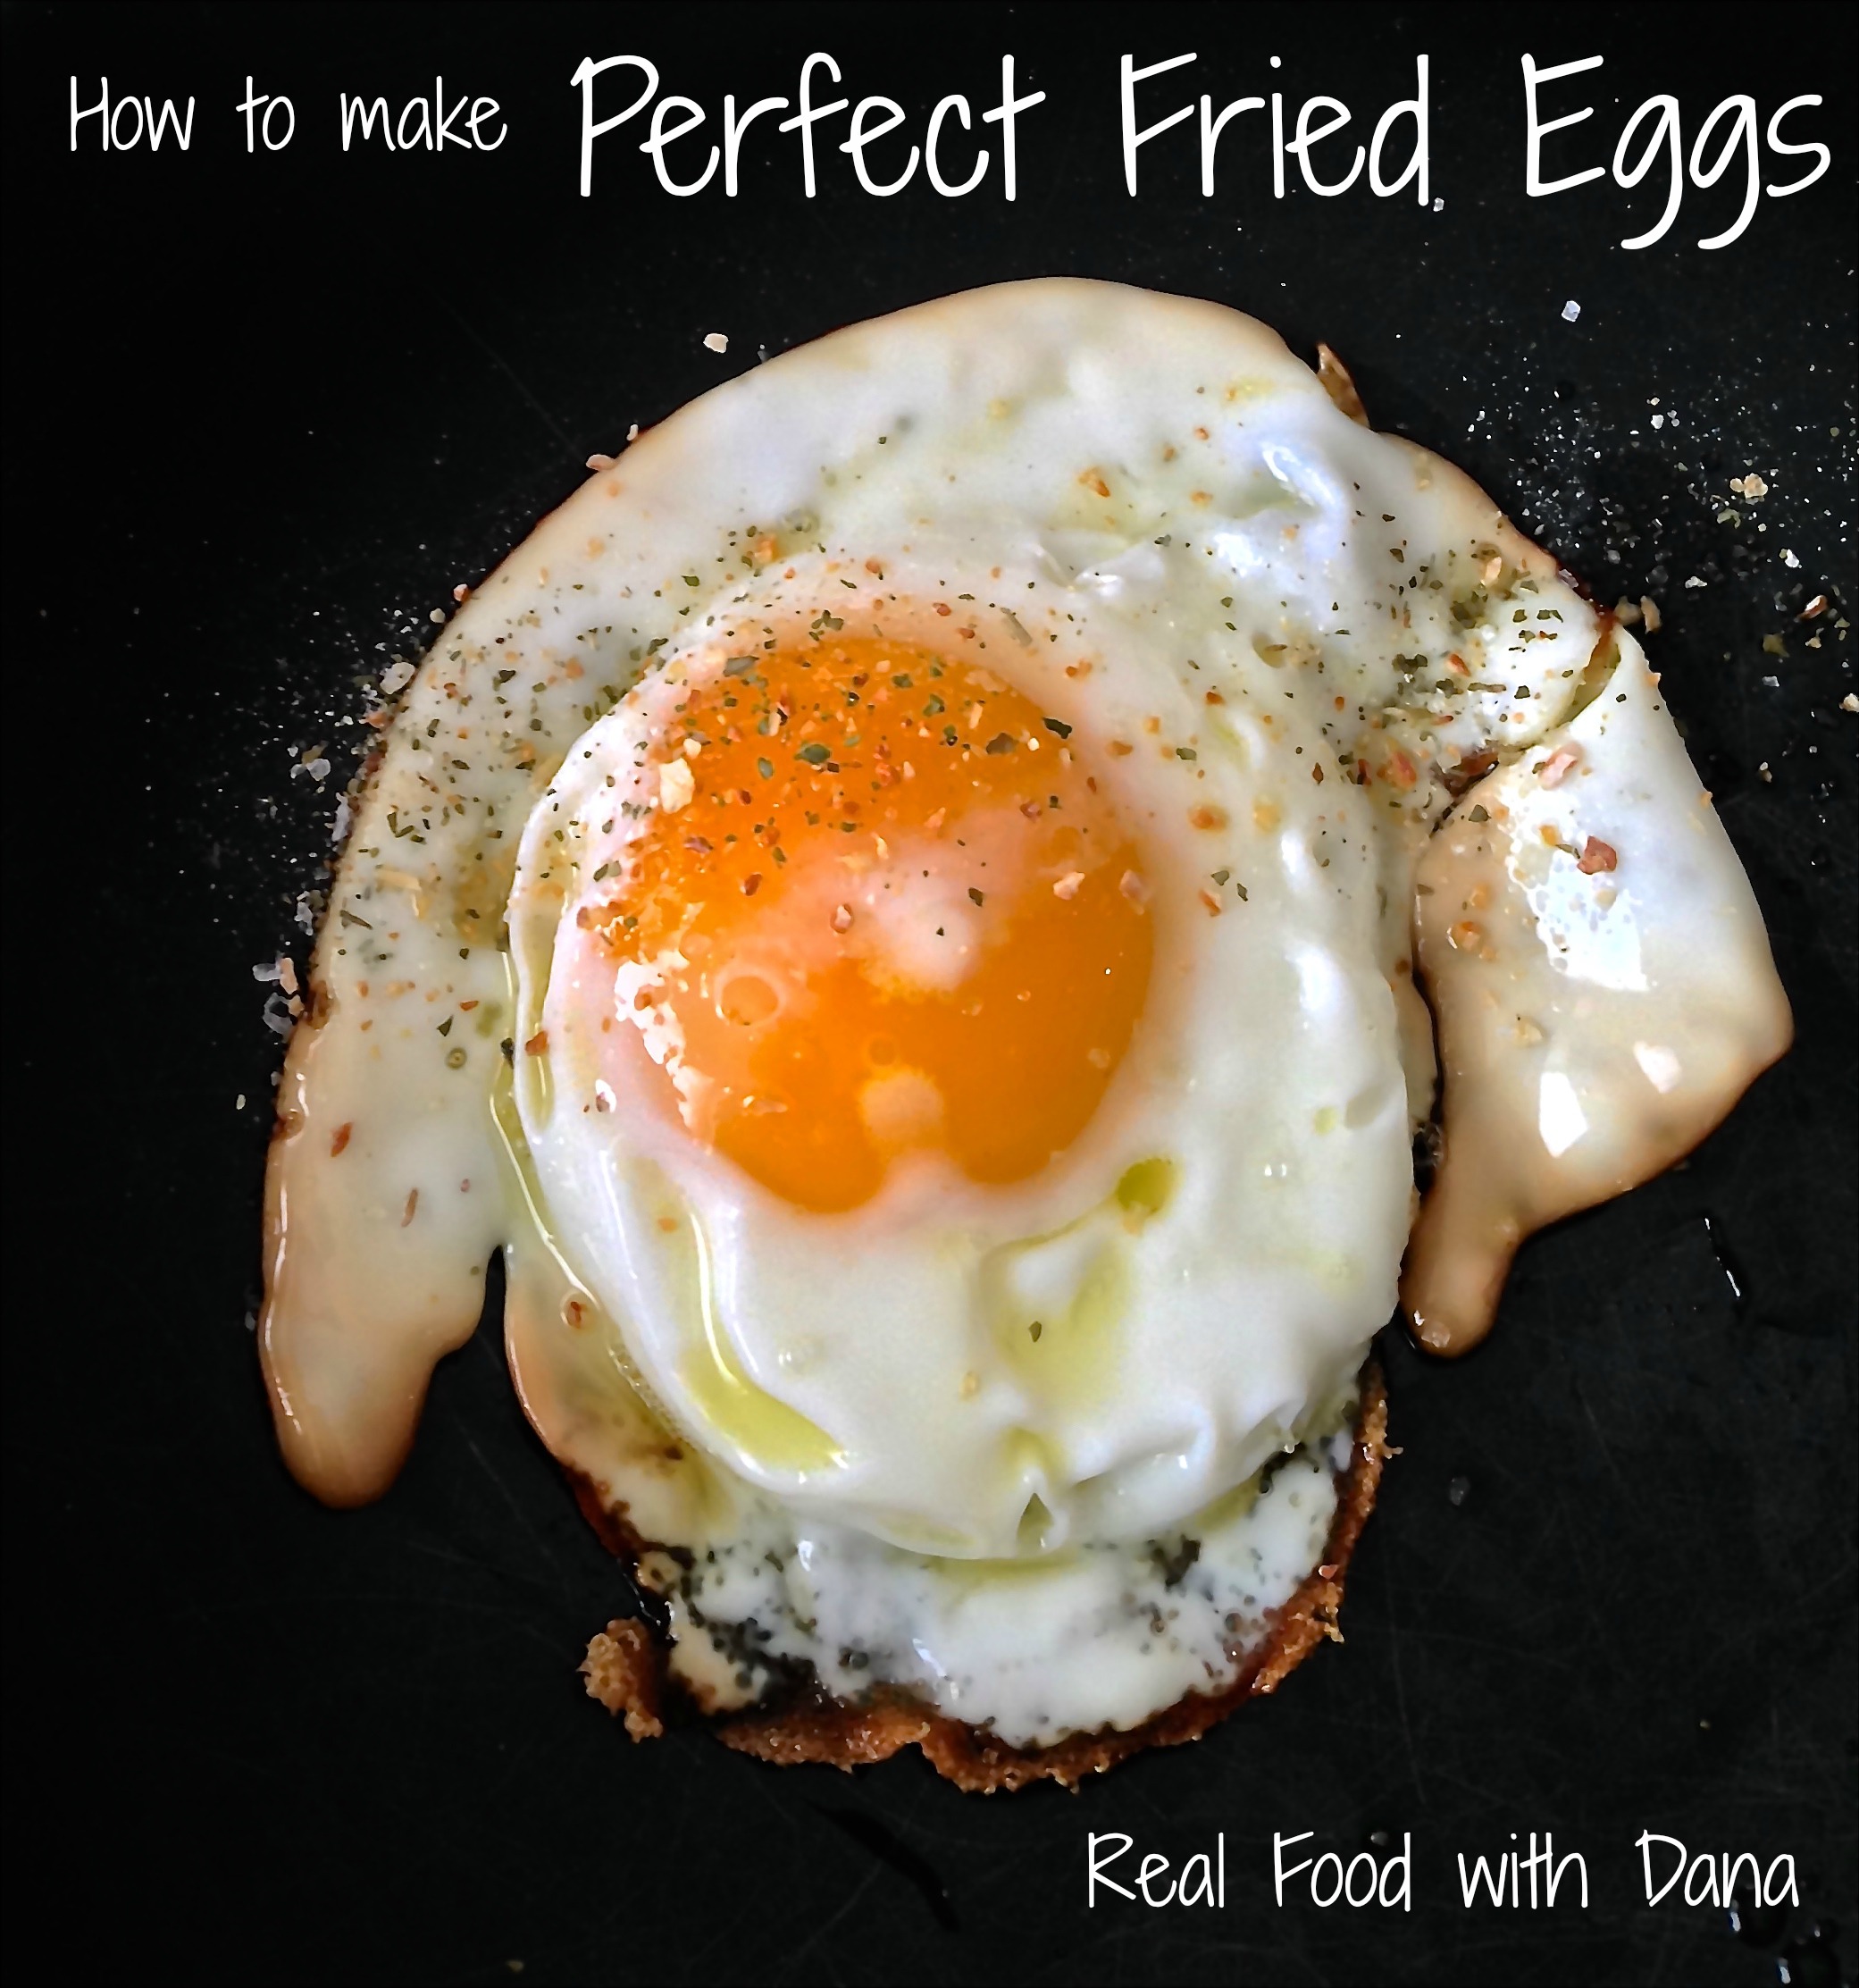 https://www.realfoodwithdana.com/wp-content/uploads/2015/04/Perfect-Fried-Eggs-.jpg